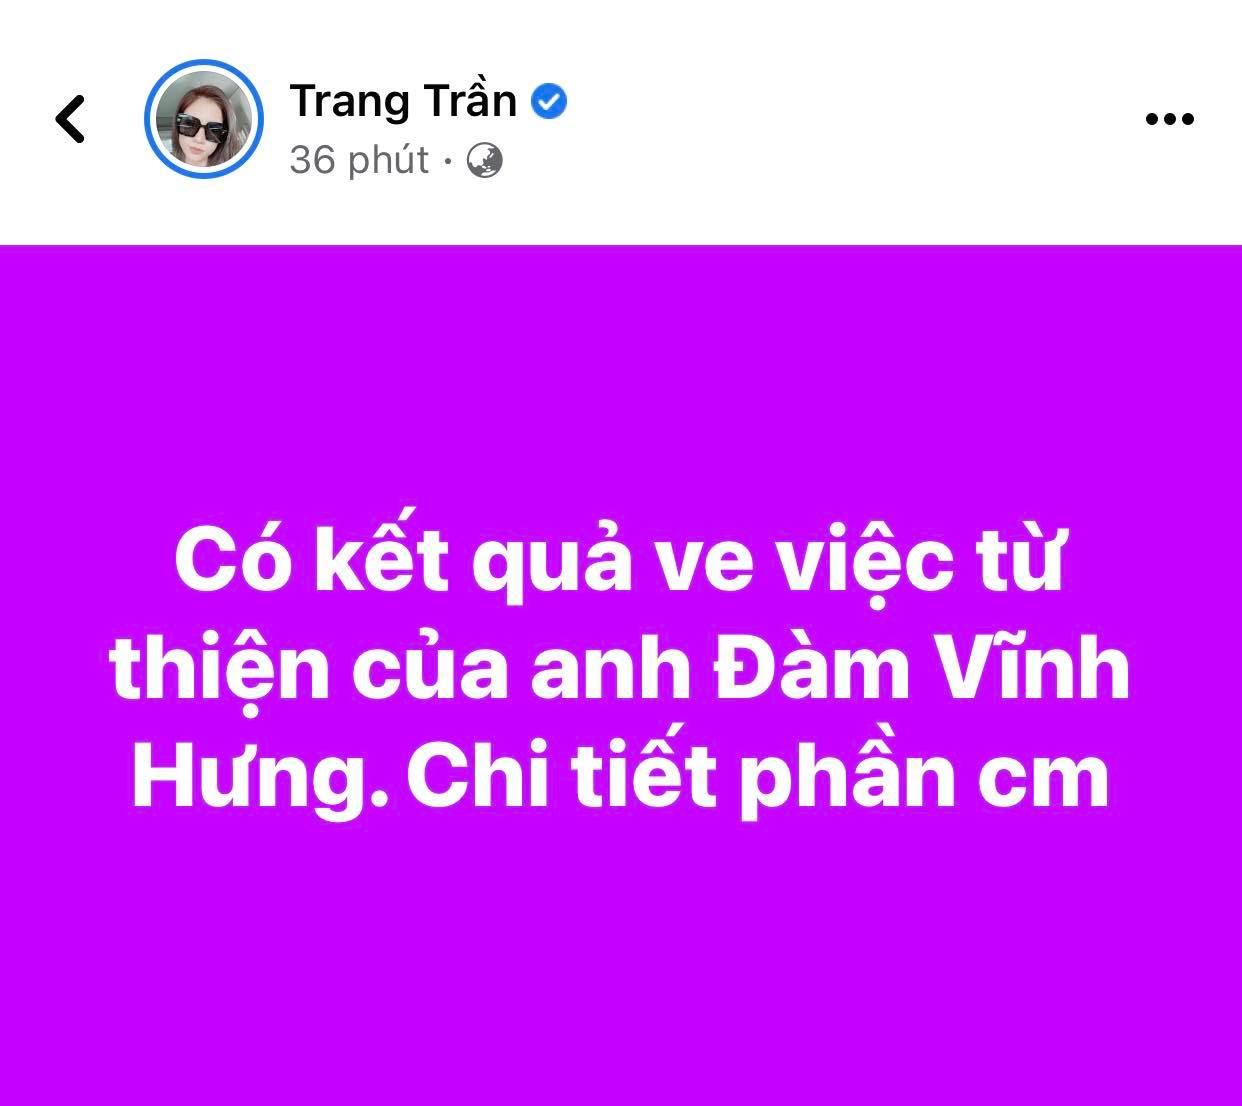 Trang-tran-he-lo-ket-qua-dieu-tra-chinh-thuc-vu-dam-vinh-hung-bi-to-an-chan-tien-tu-thien-mien-trung